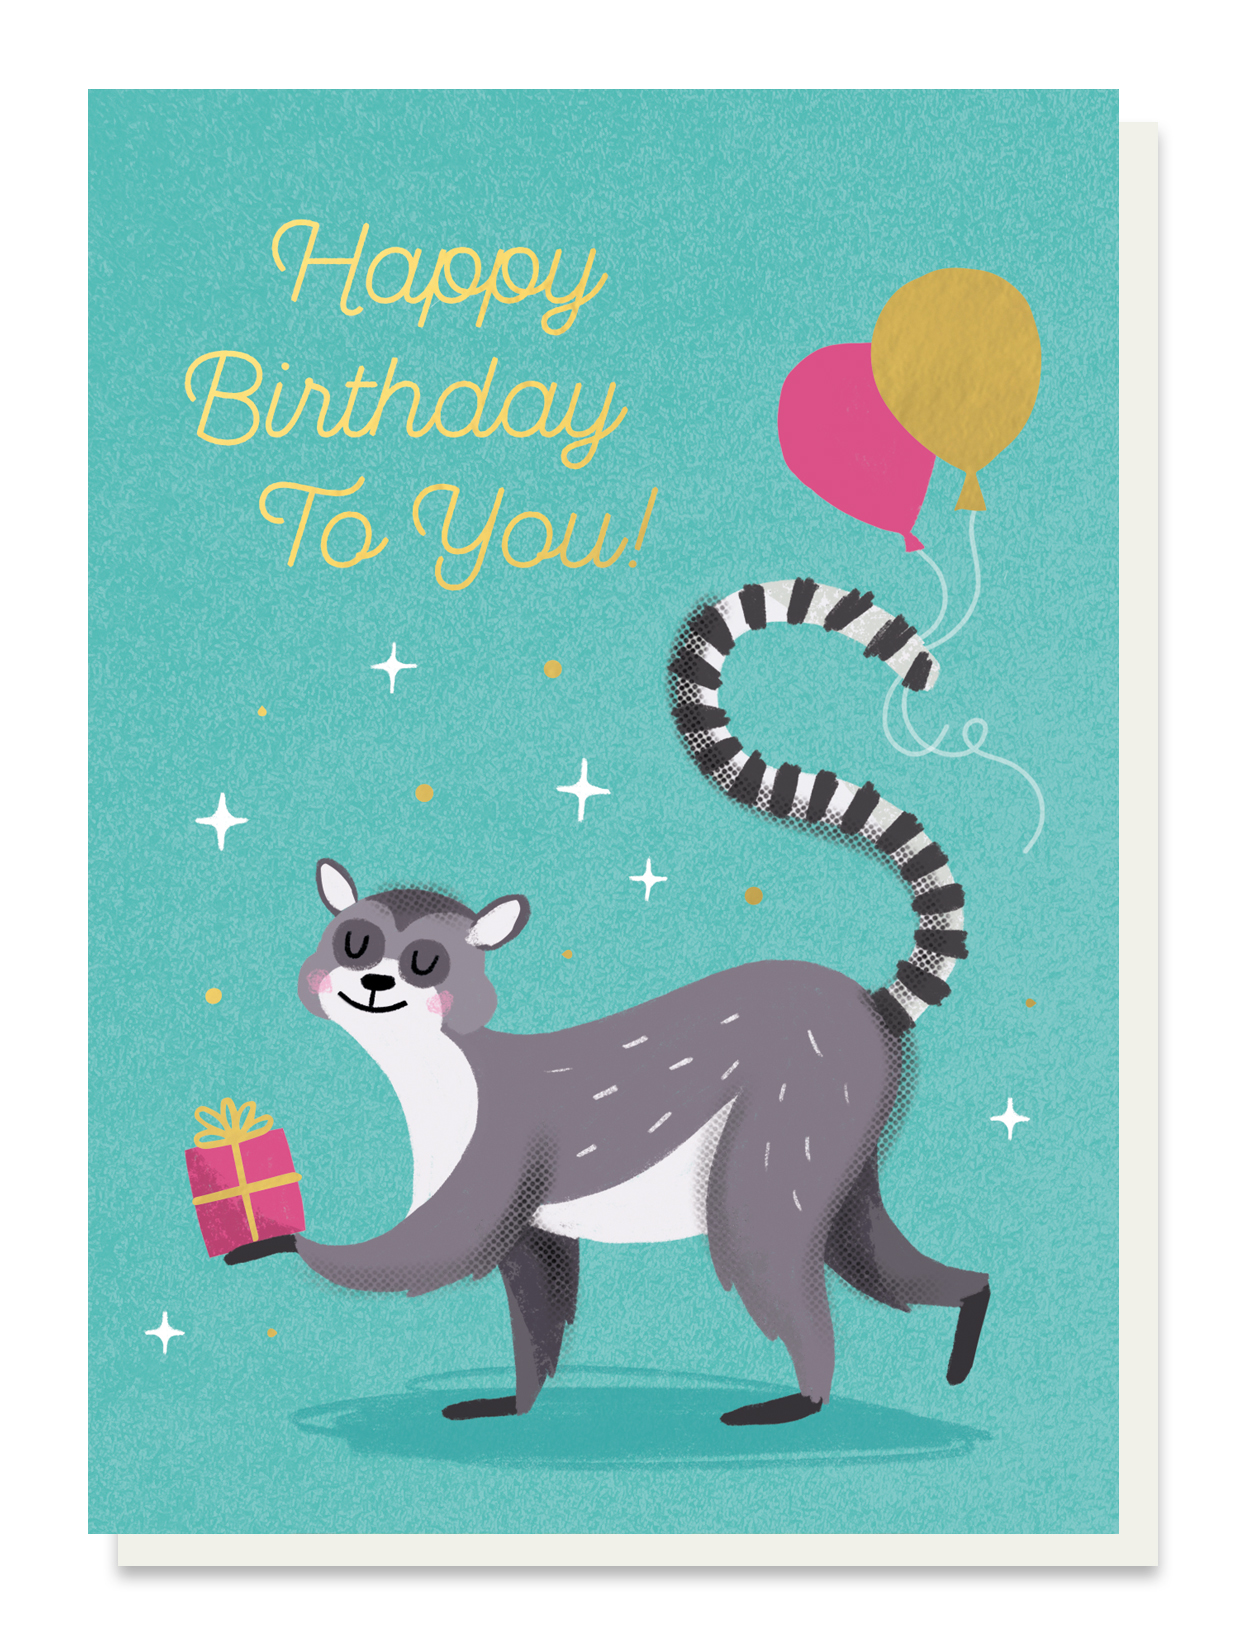 Birthday LEmur card by stormy knight